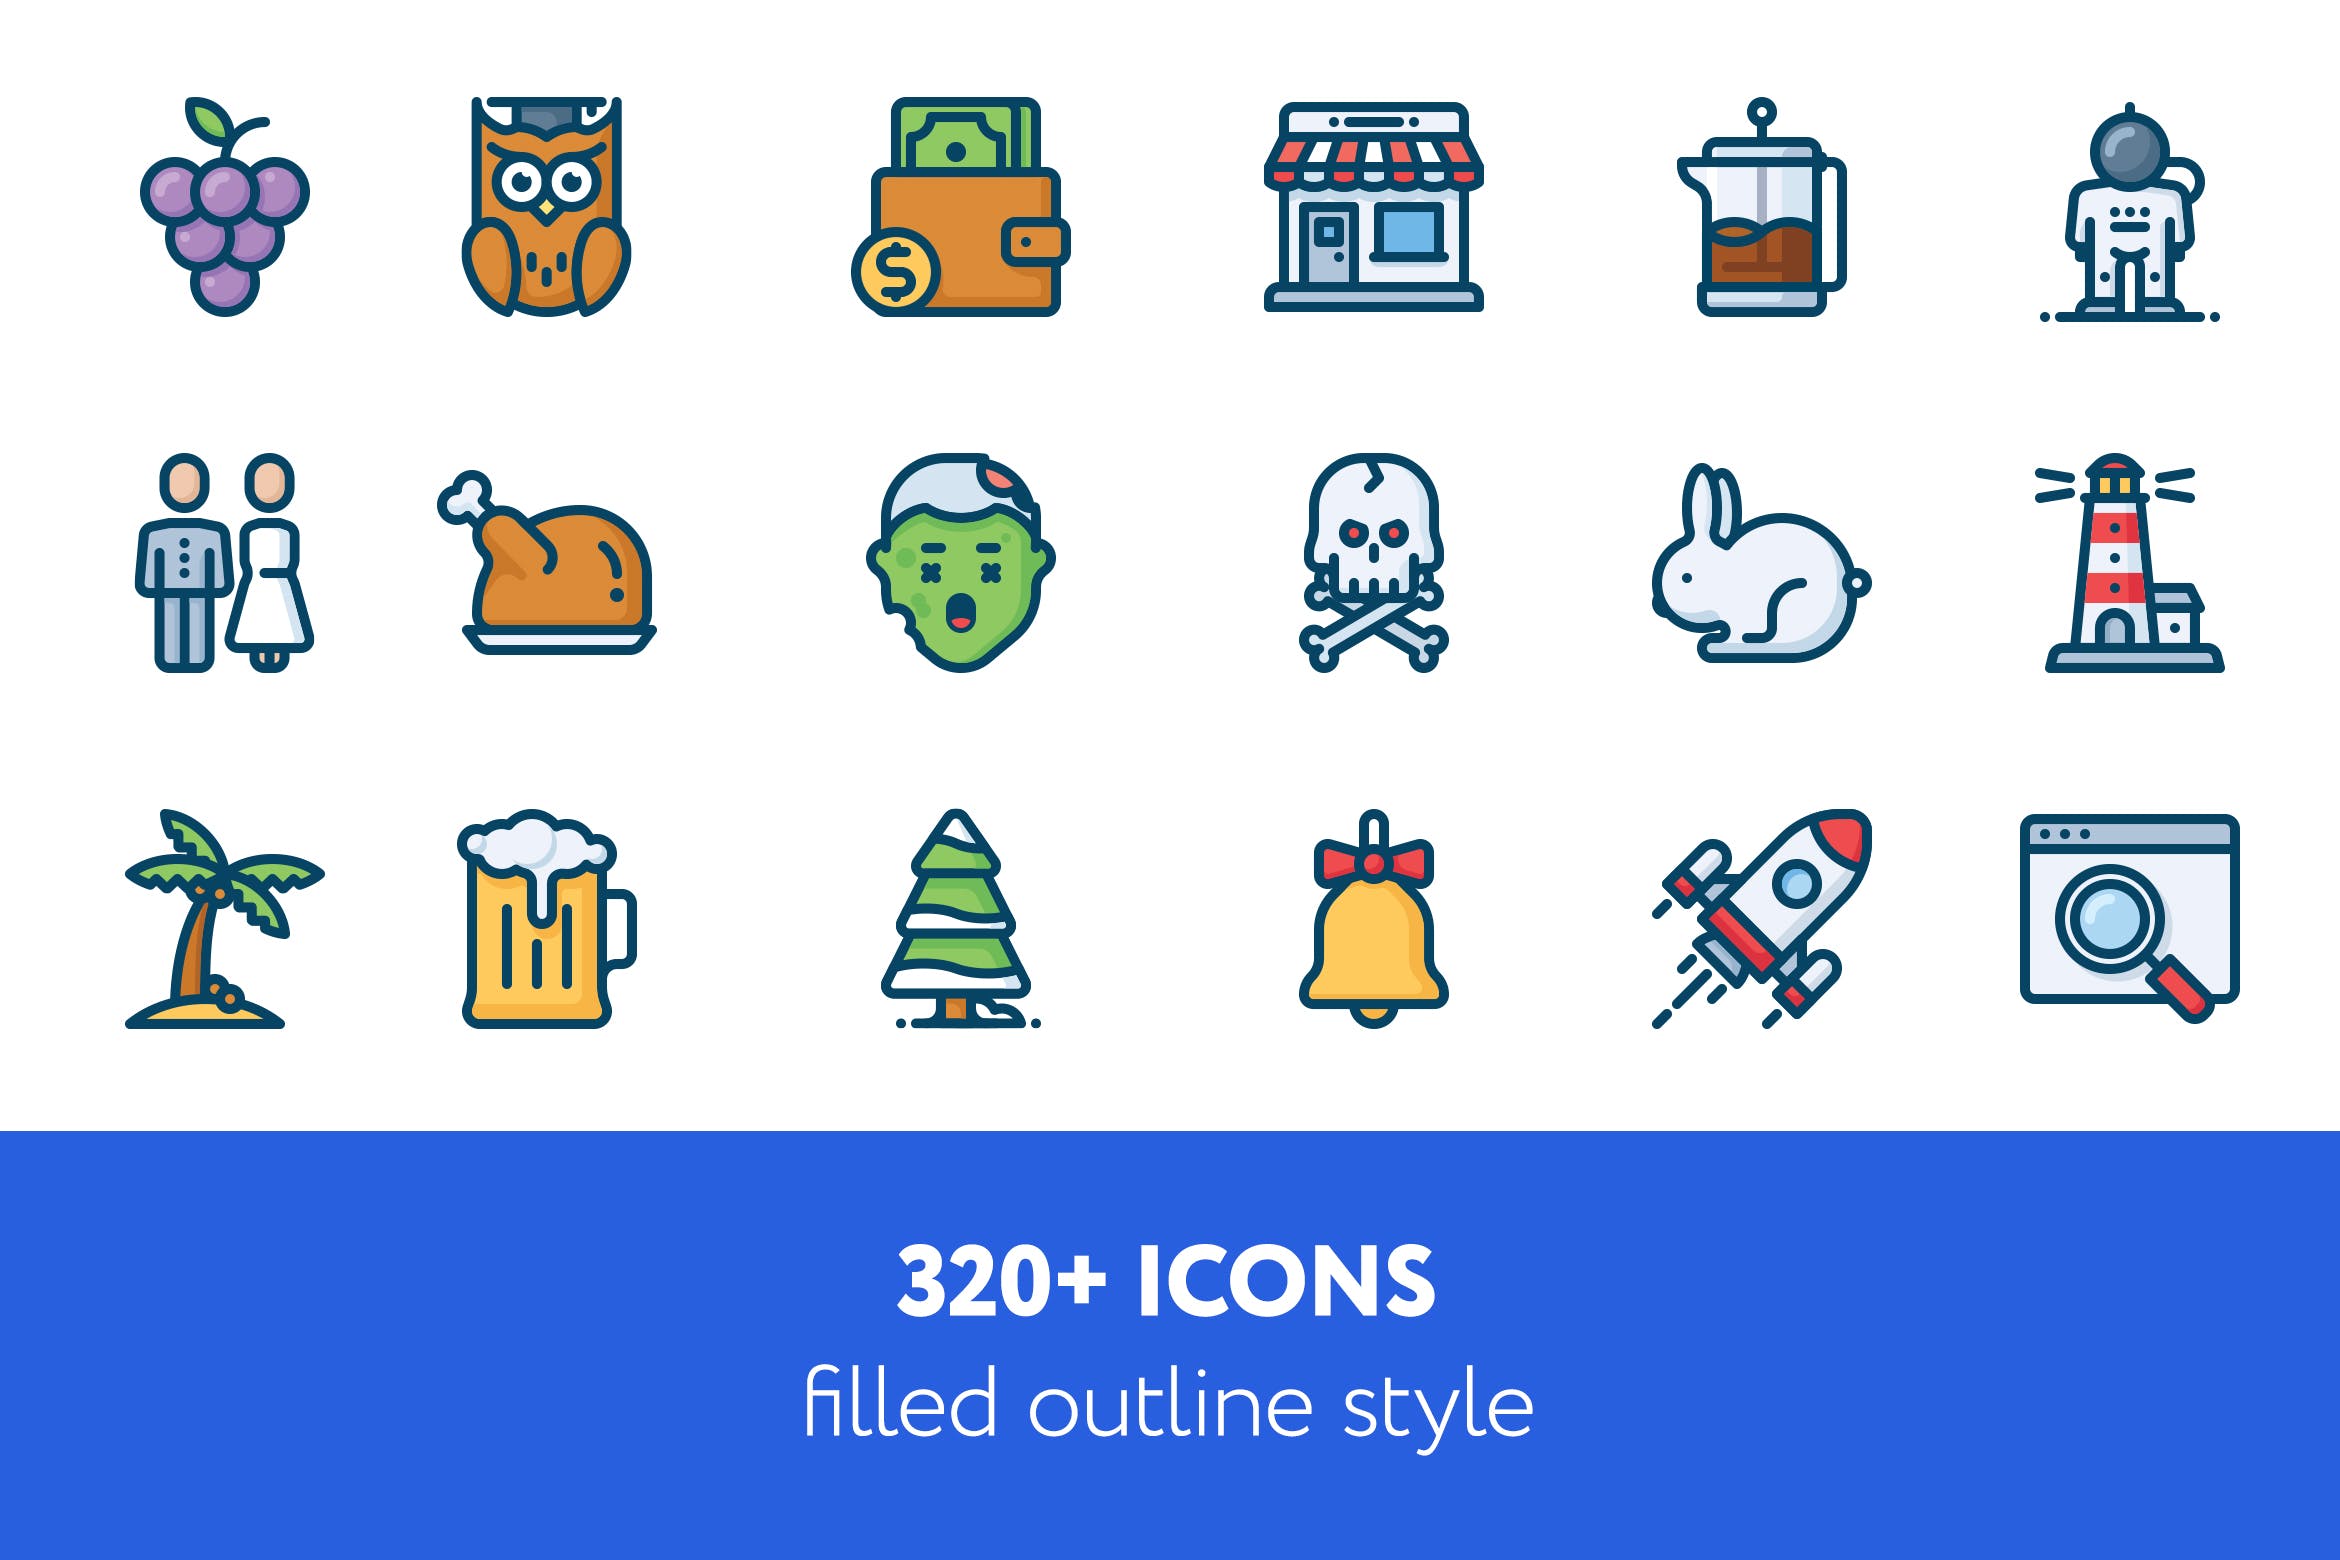 （合集）多行业描边风创意图标源文件下载320 + icons filled outline style